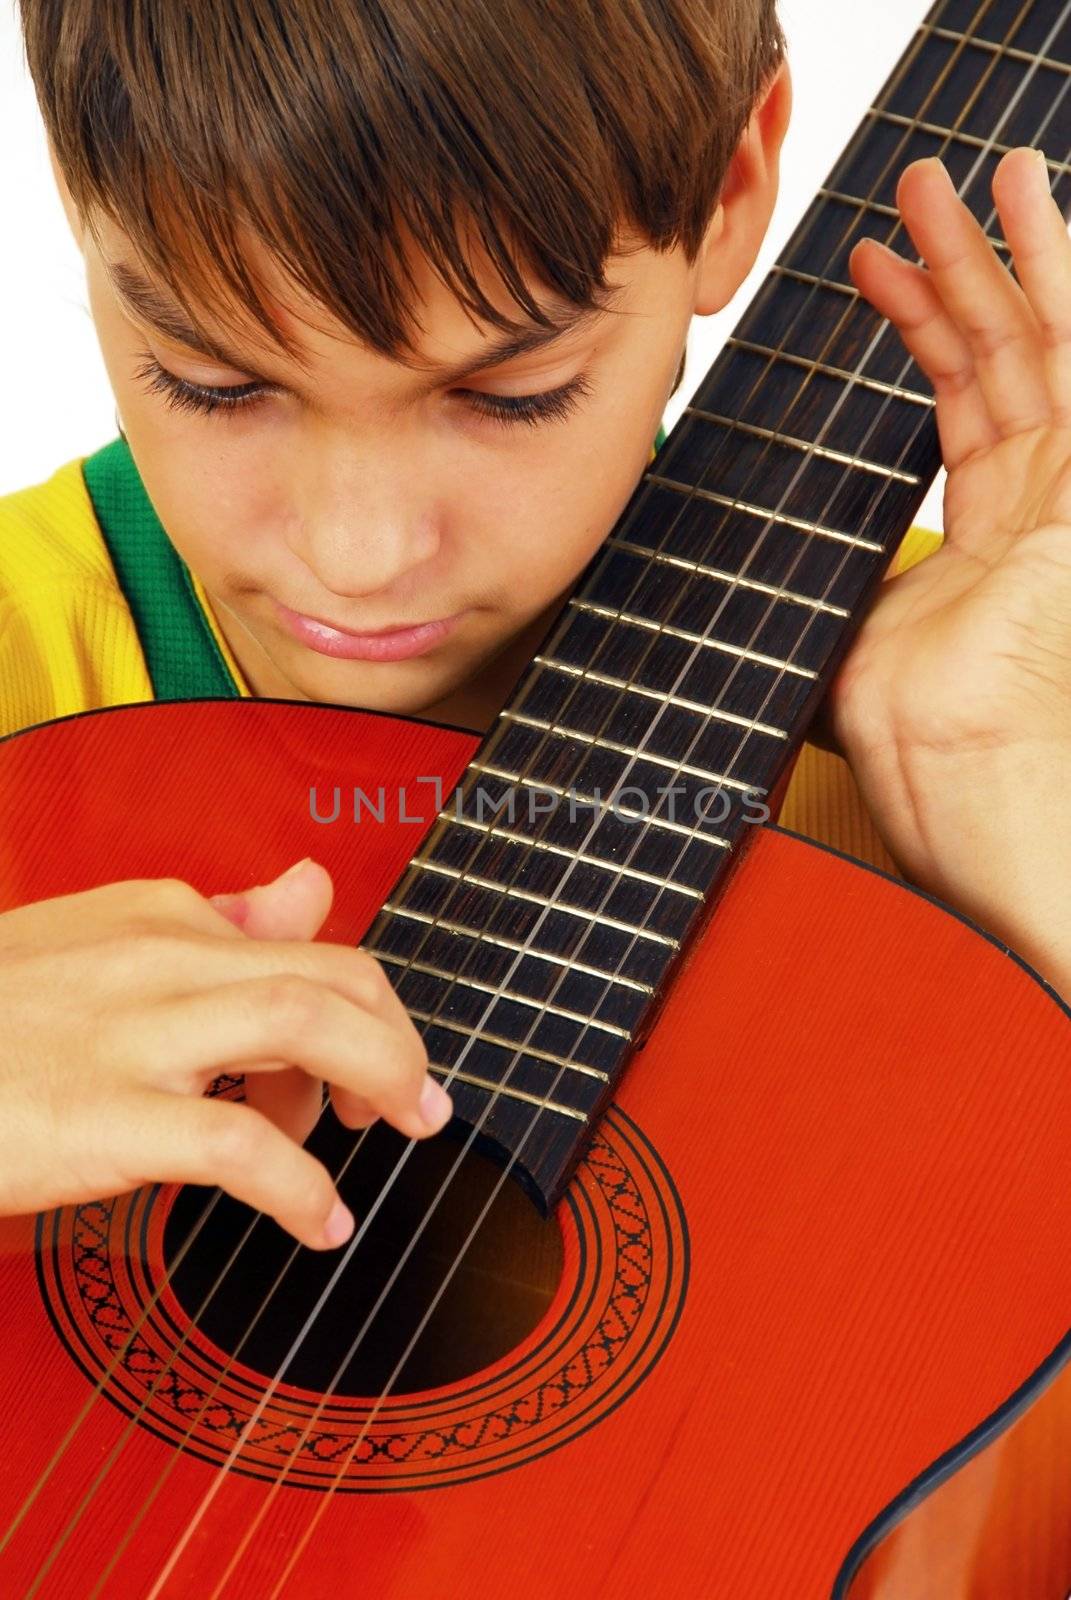 caucasian boy portrait with orange wooden guitar